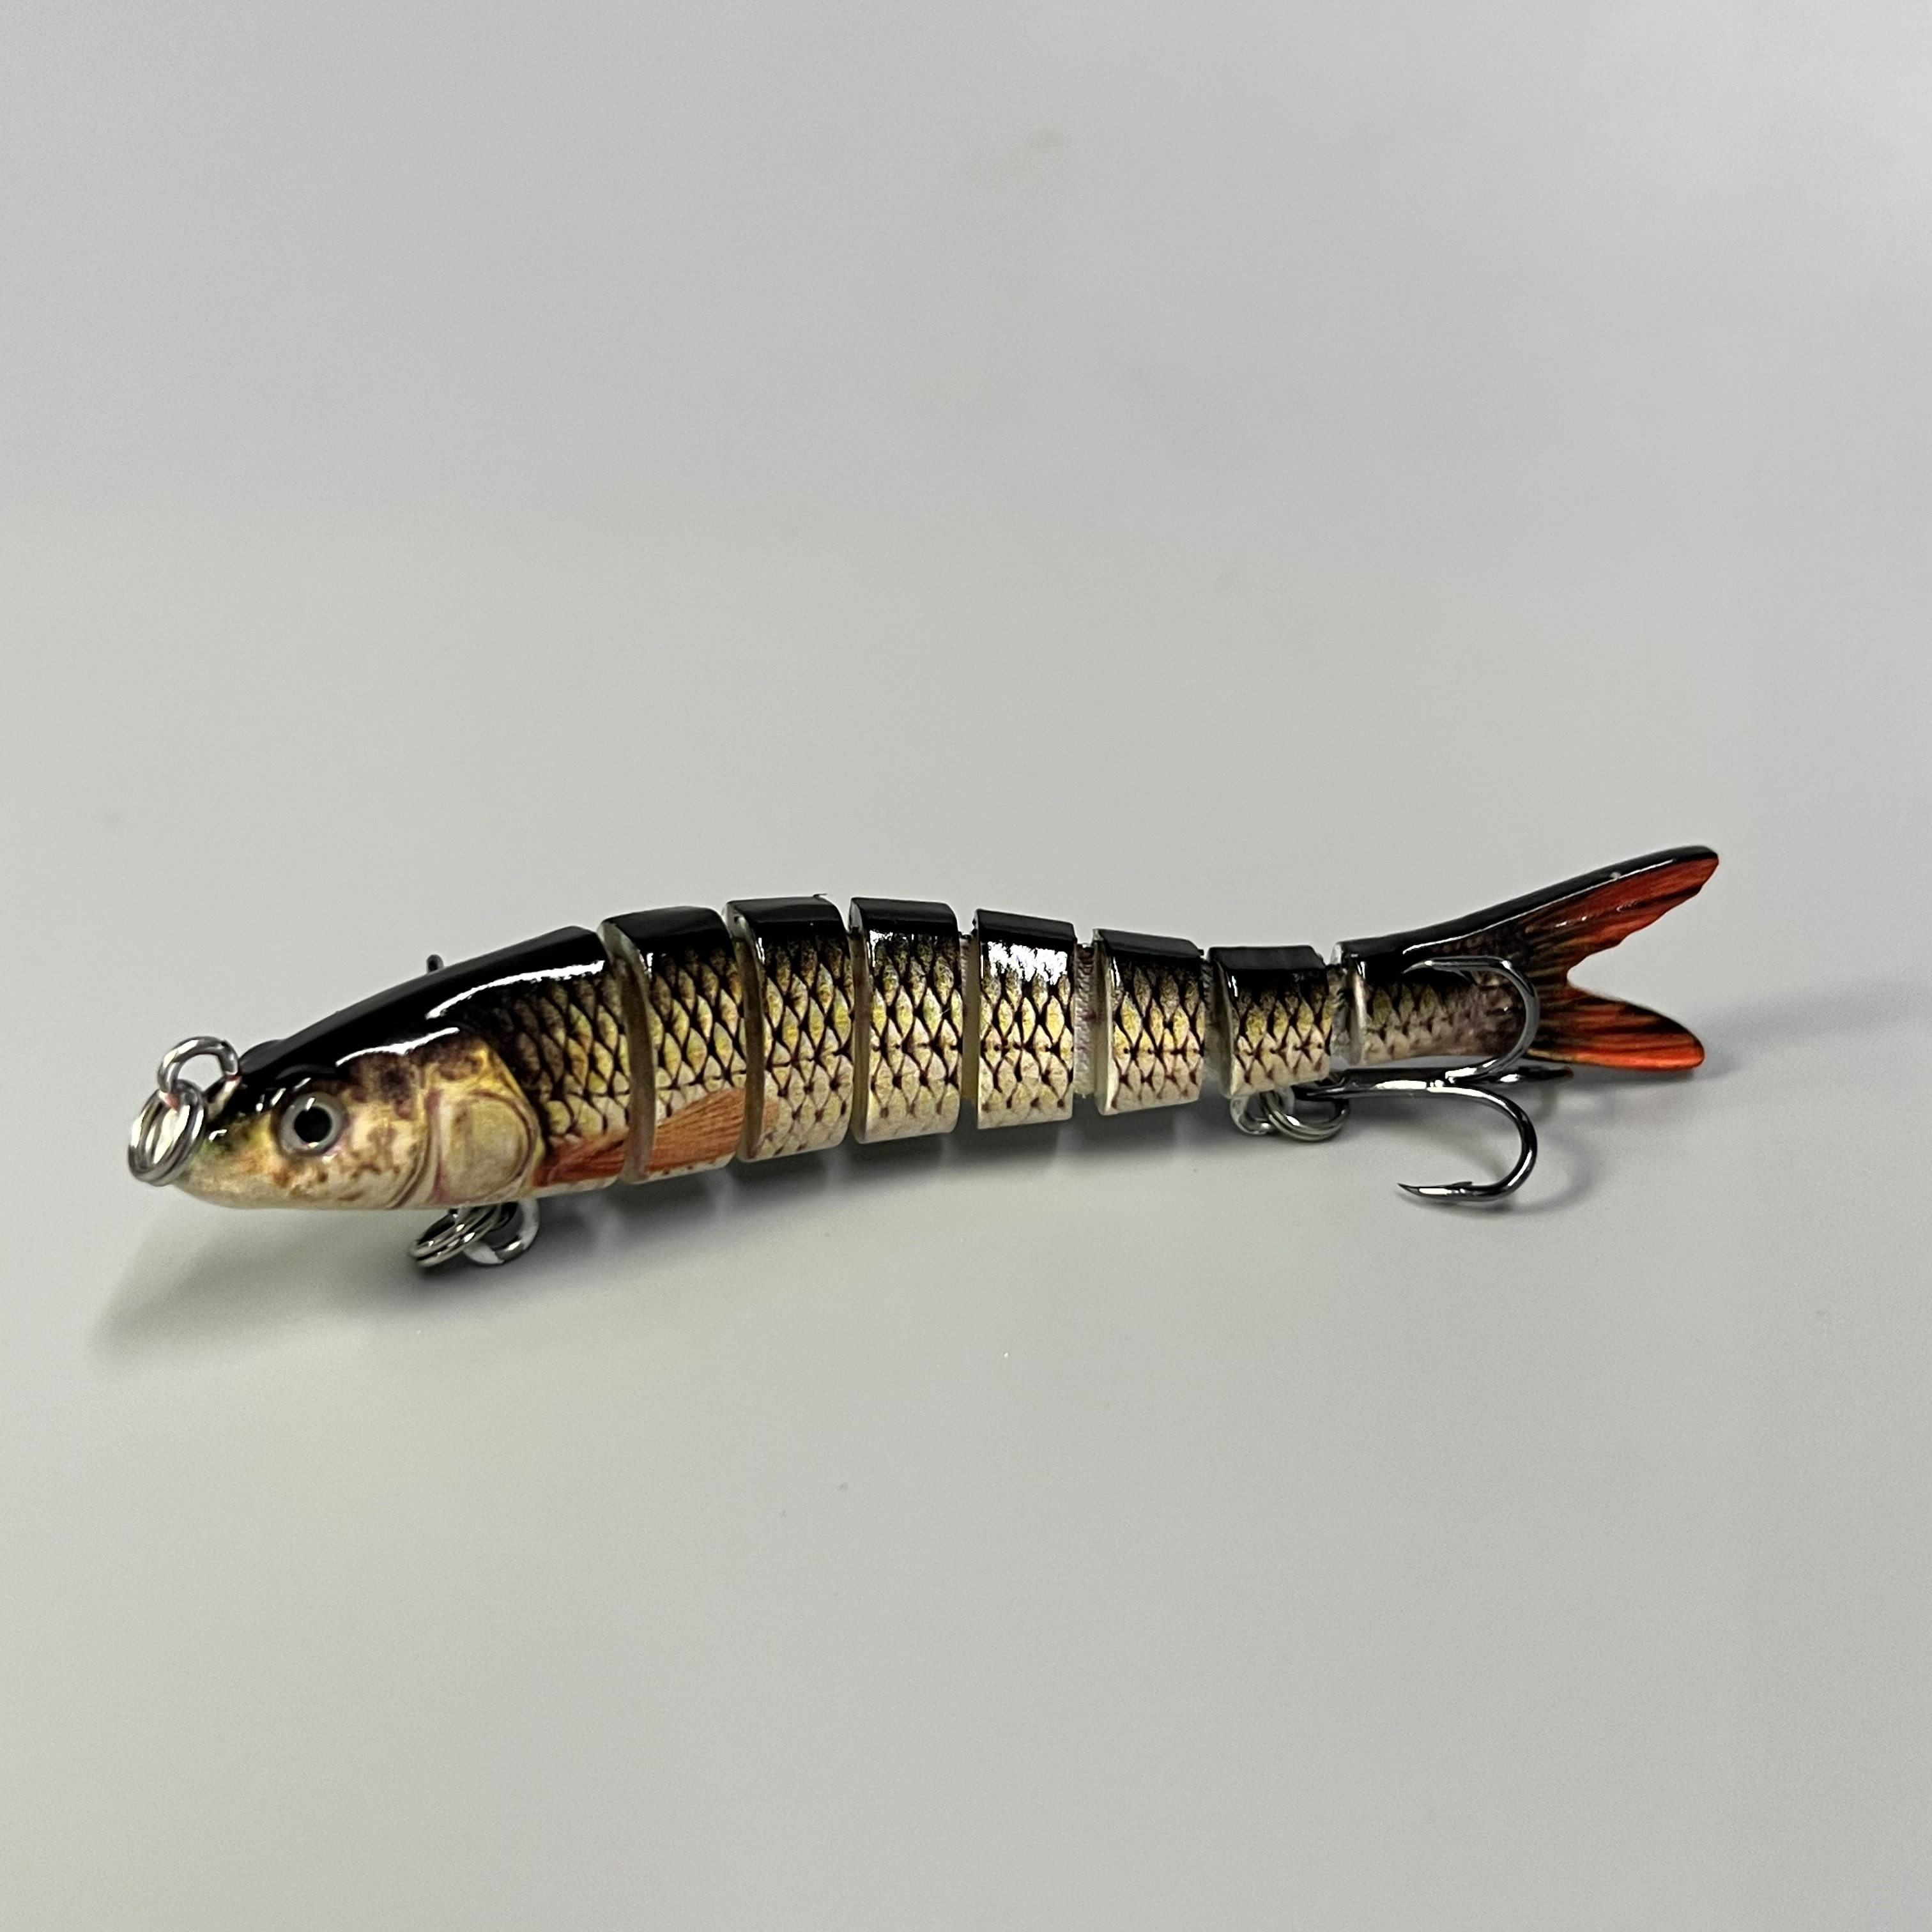 5PCS/SET JOINTED FISHING Lures 13.7cm/27g Wobblers Swimbait Hard Bait  8-Segment $21.99 - PicClick AU